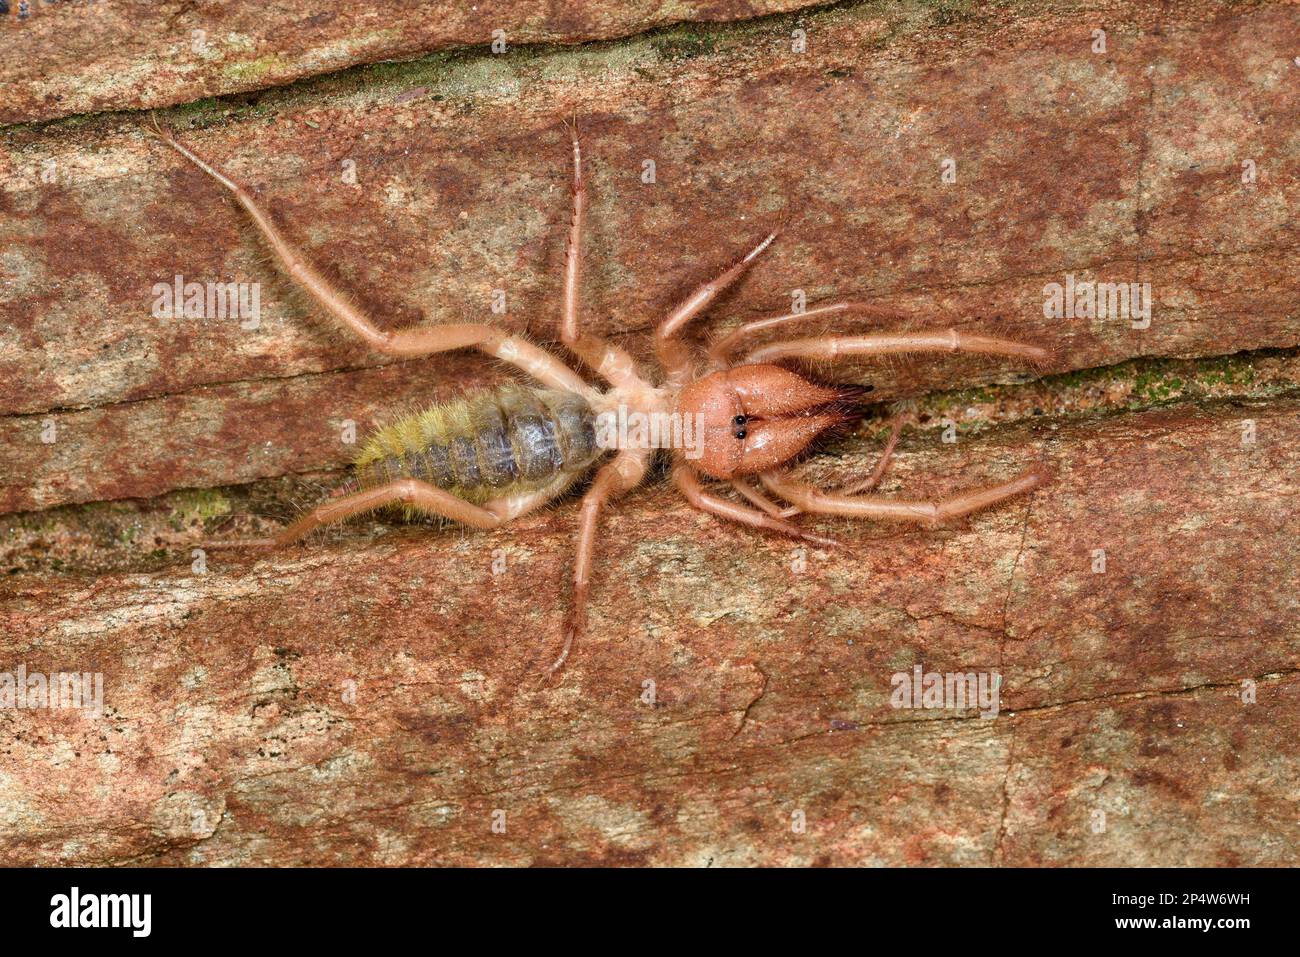 Solifuge or Camel Spider ( Solifugae) adult resting on rock, Windhoek, Namibia, January Stock Photo